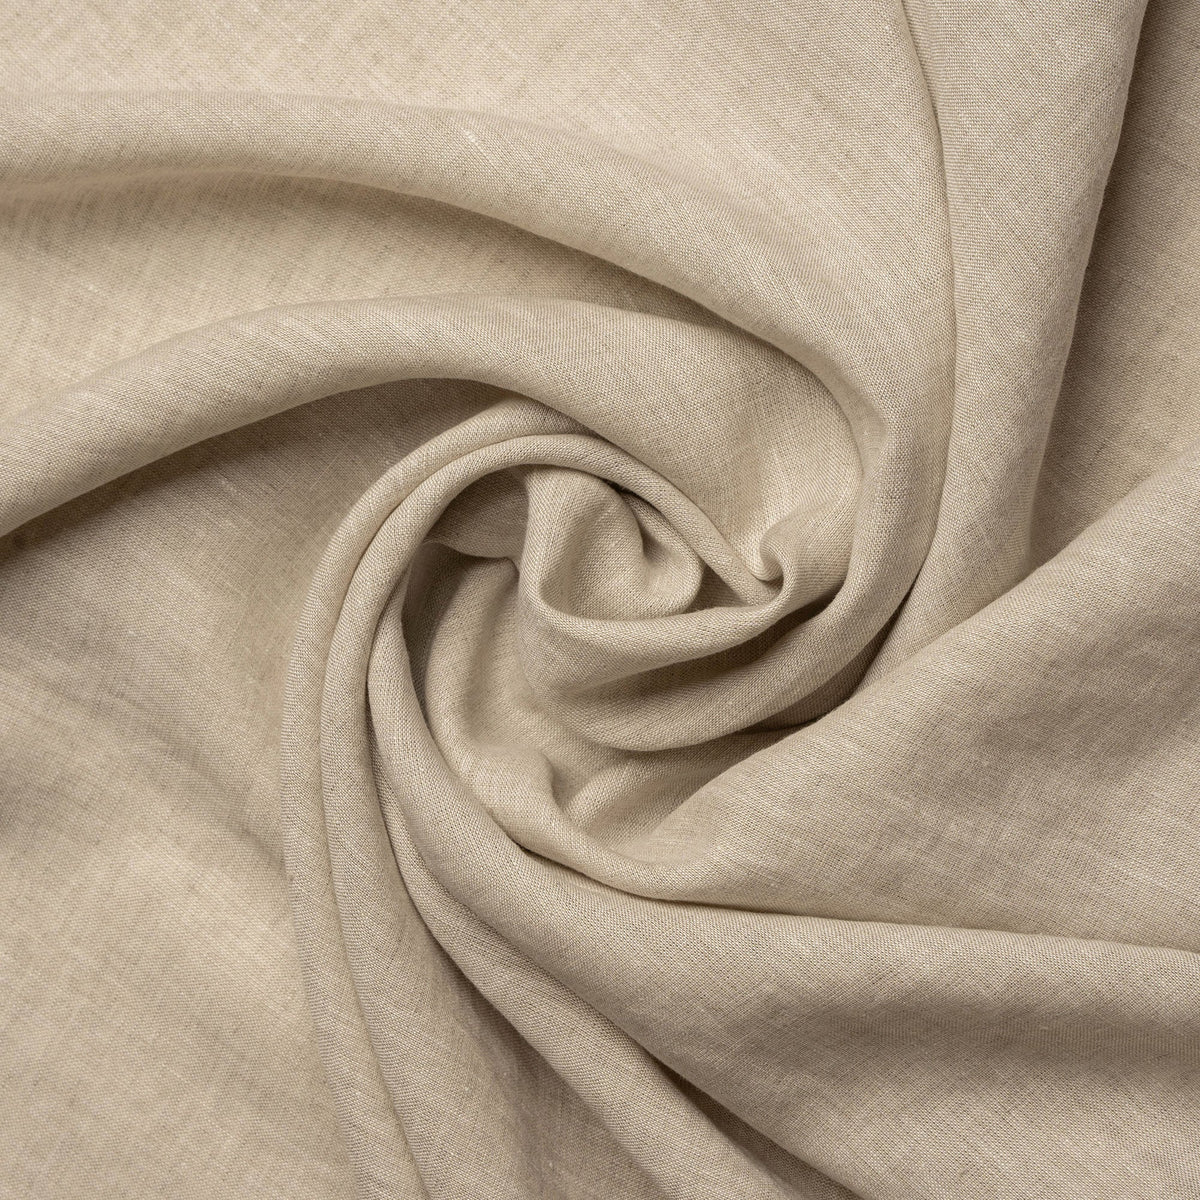 MENIQUE 100% Linen Double Fabric Blanket